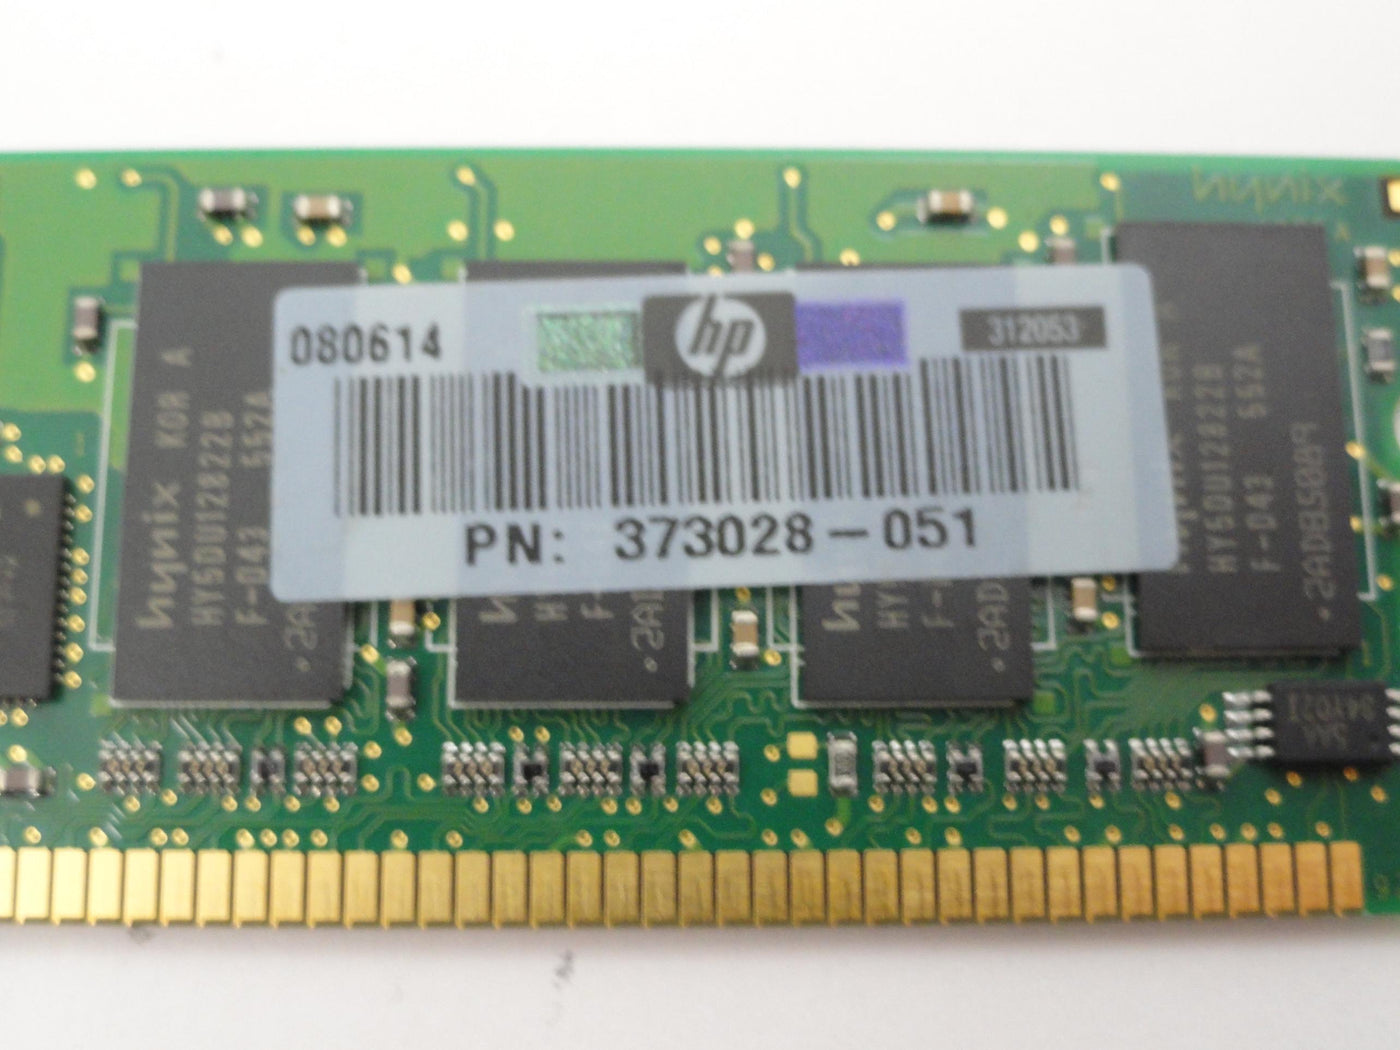 MC3807_PC3200R-30330_Hynix HP 512Mb PC3200 400Mhz DDR CL3 ECC RAM - Image3